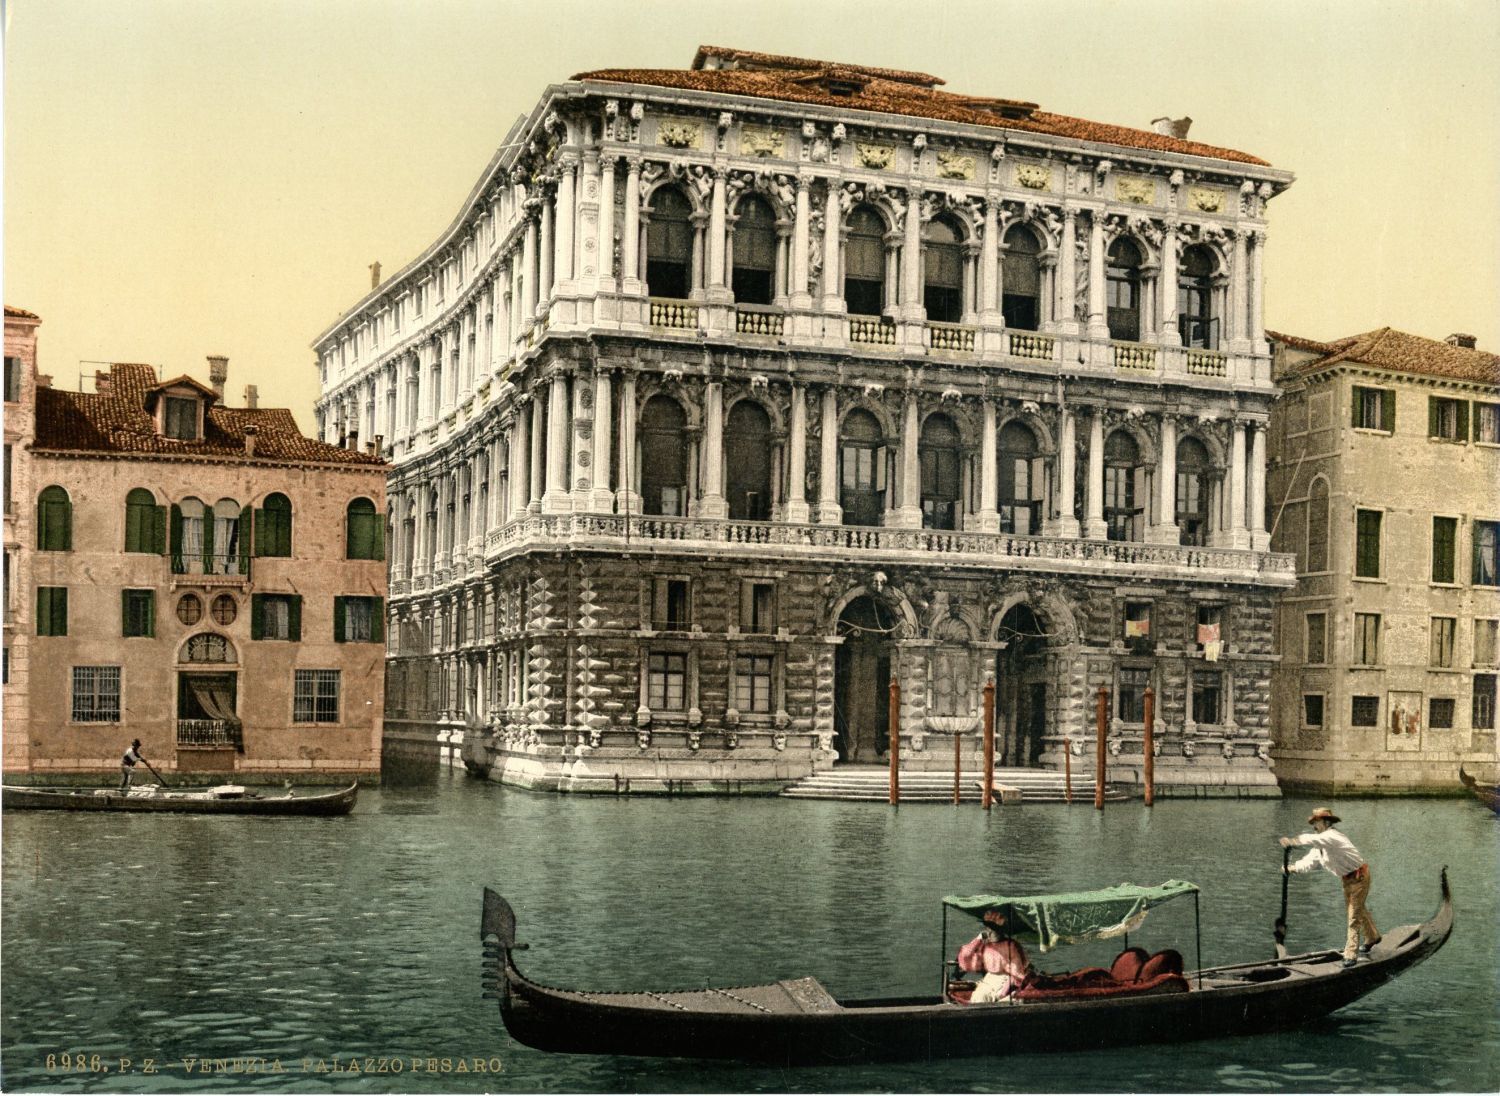 Venice. Palazzo Pesaro. Original vintage photochrome, vintage photochrome,